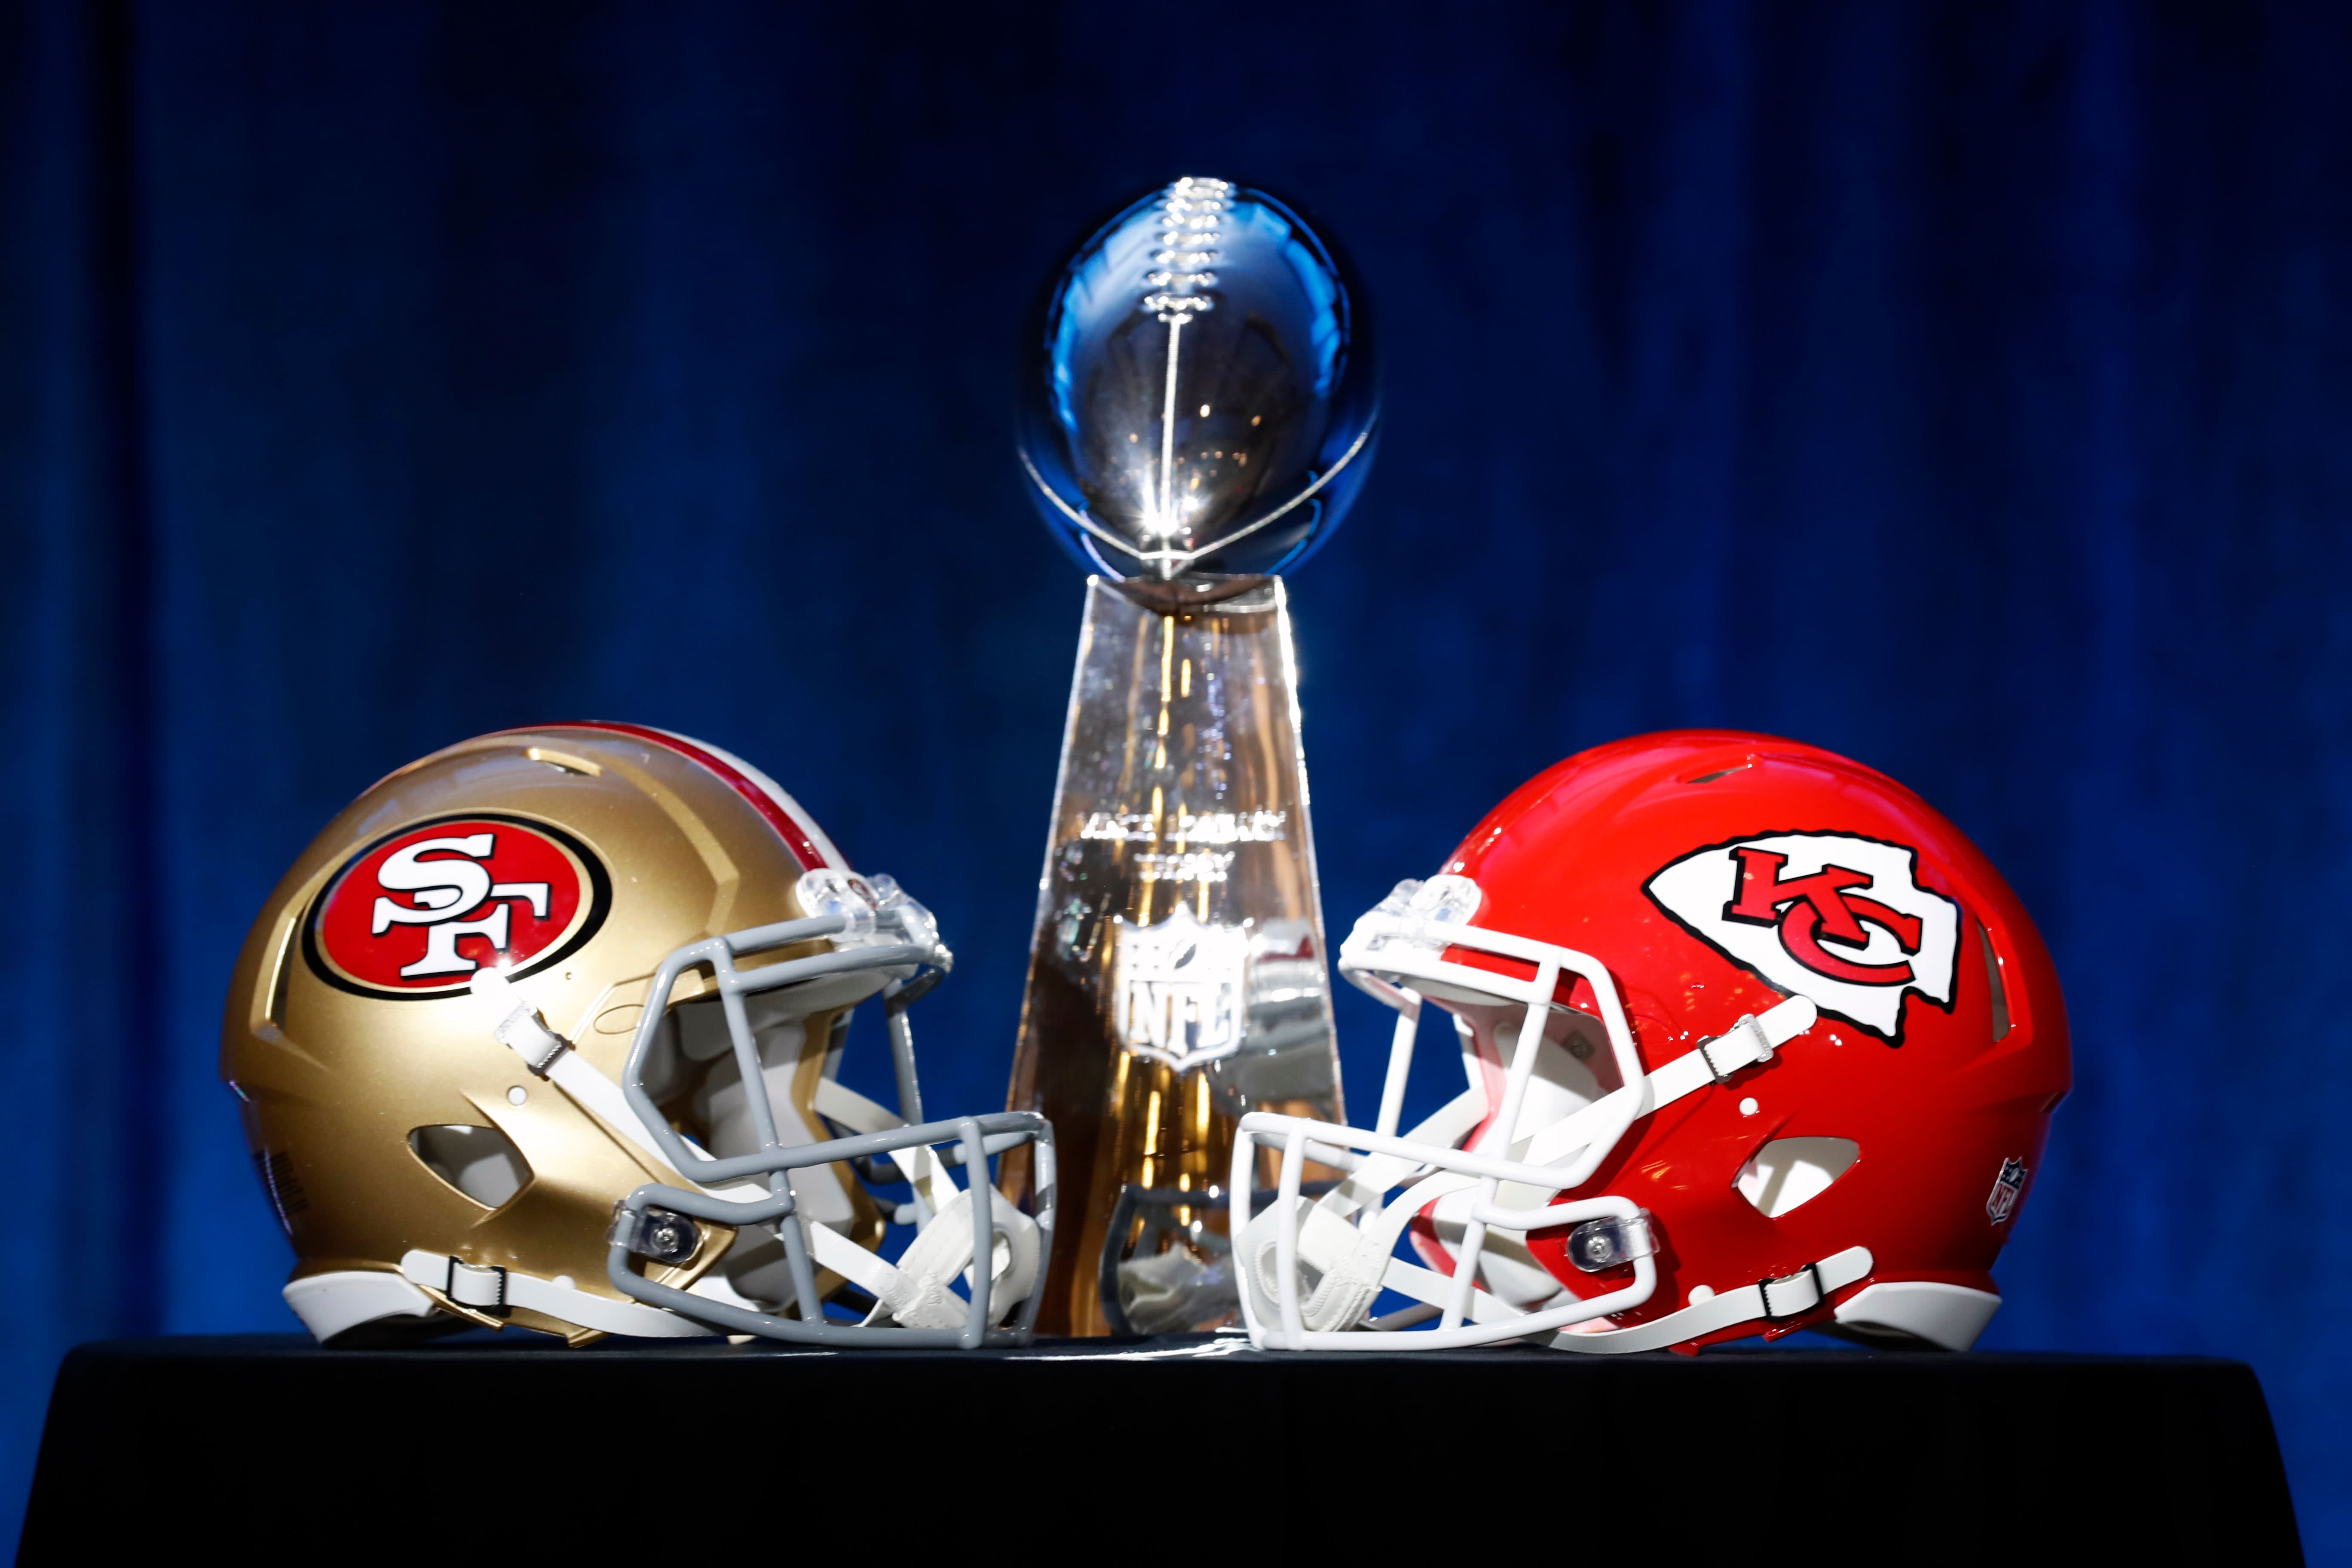 How to Watch 2020 Super Bowl LiveStream 49ers vs. Chiefs for Free